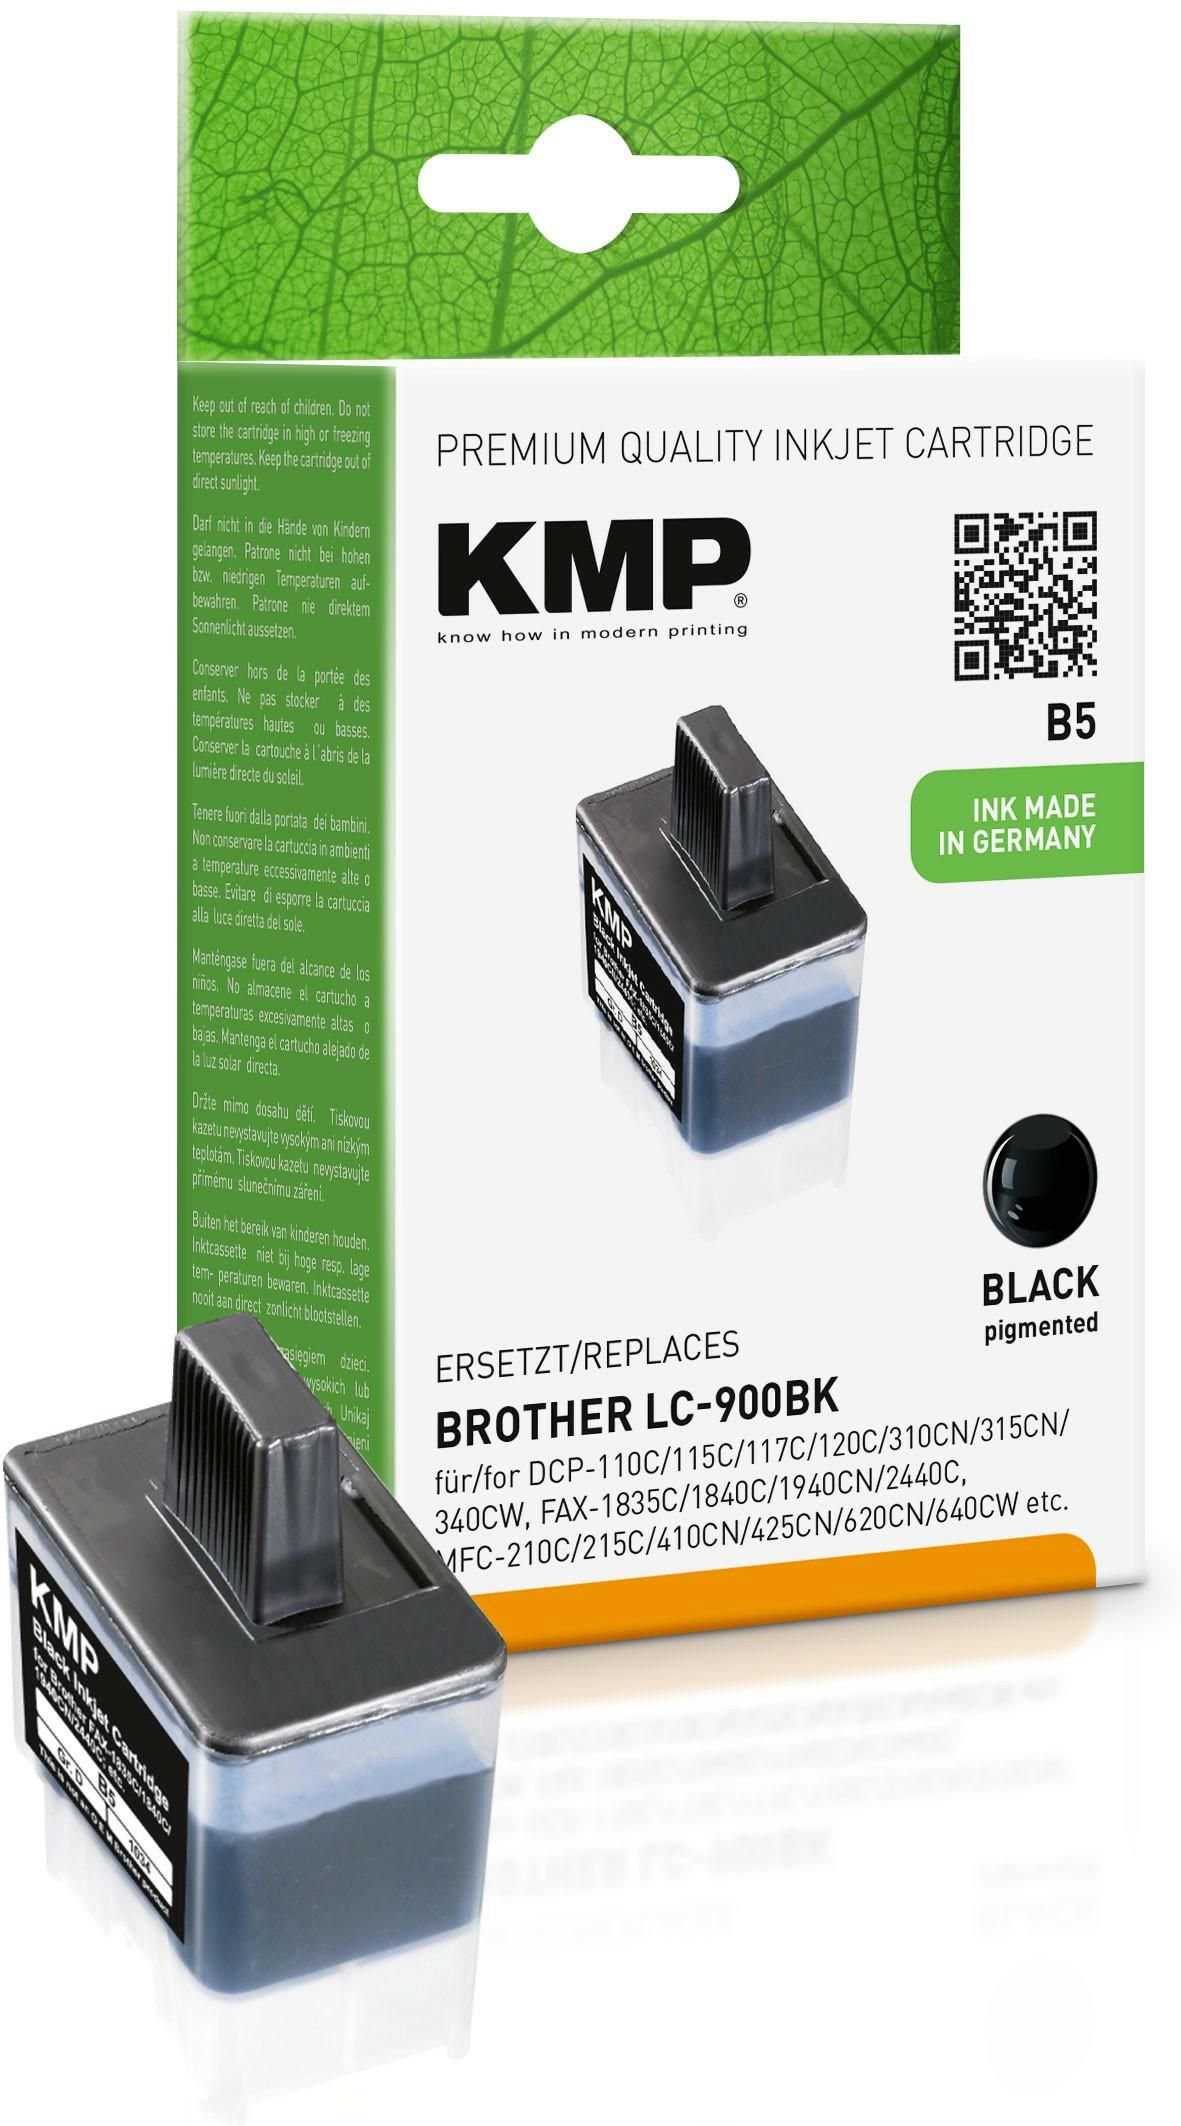 KMP-Printtechnik-AG 1034,0001 B5 ink cartridge black compati 